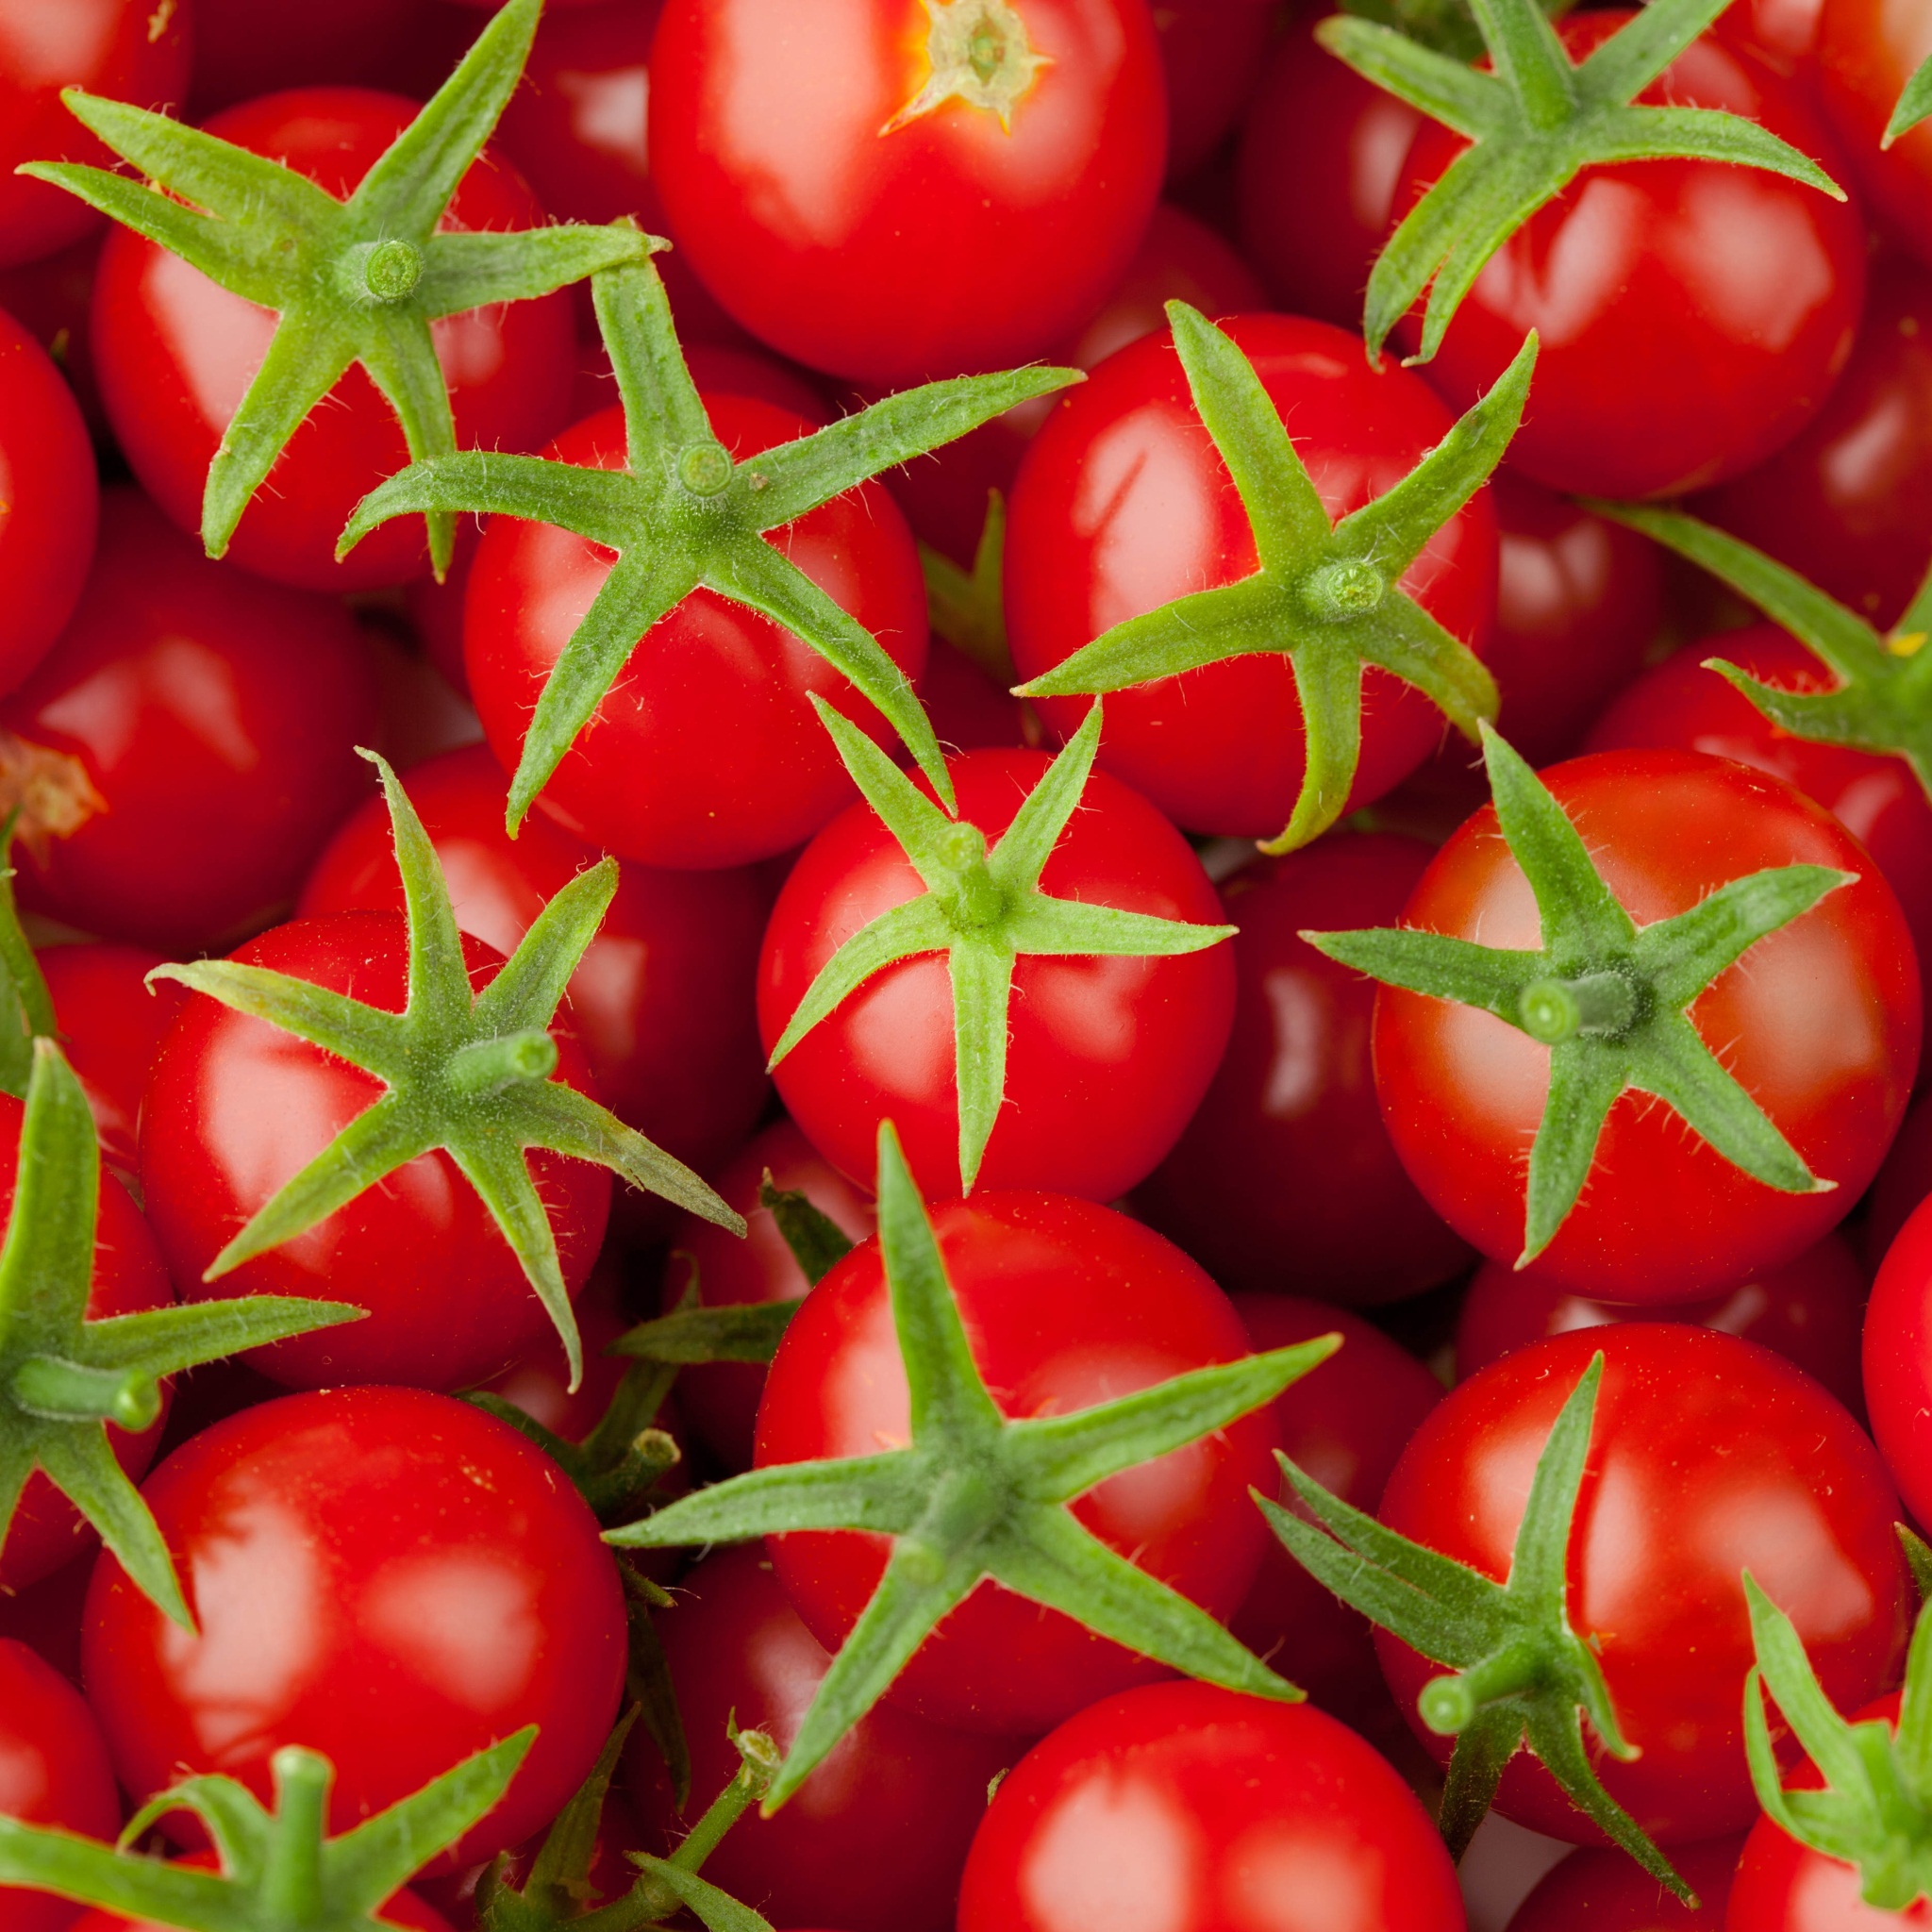 Juicy Tomatoes ♡ - Cherry Tomatoes - HD Wallpaper 